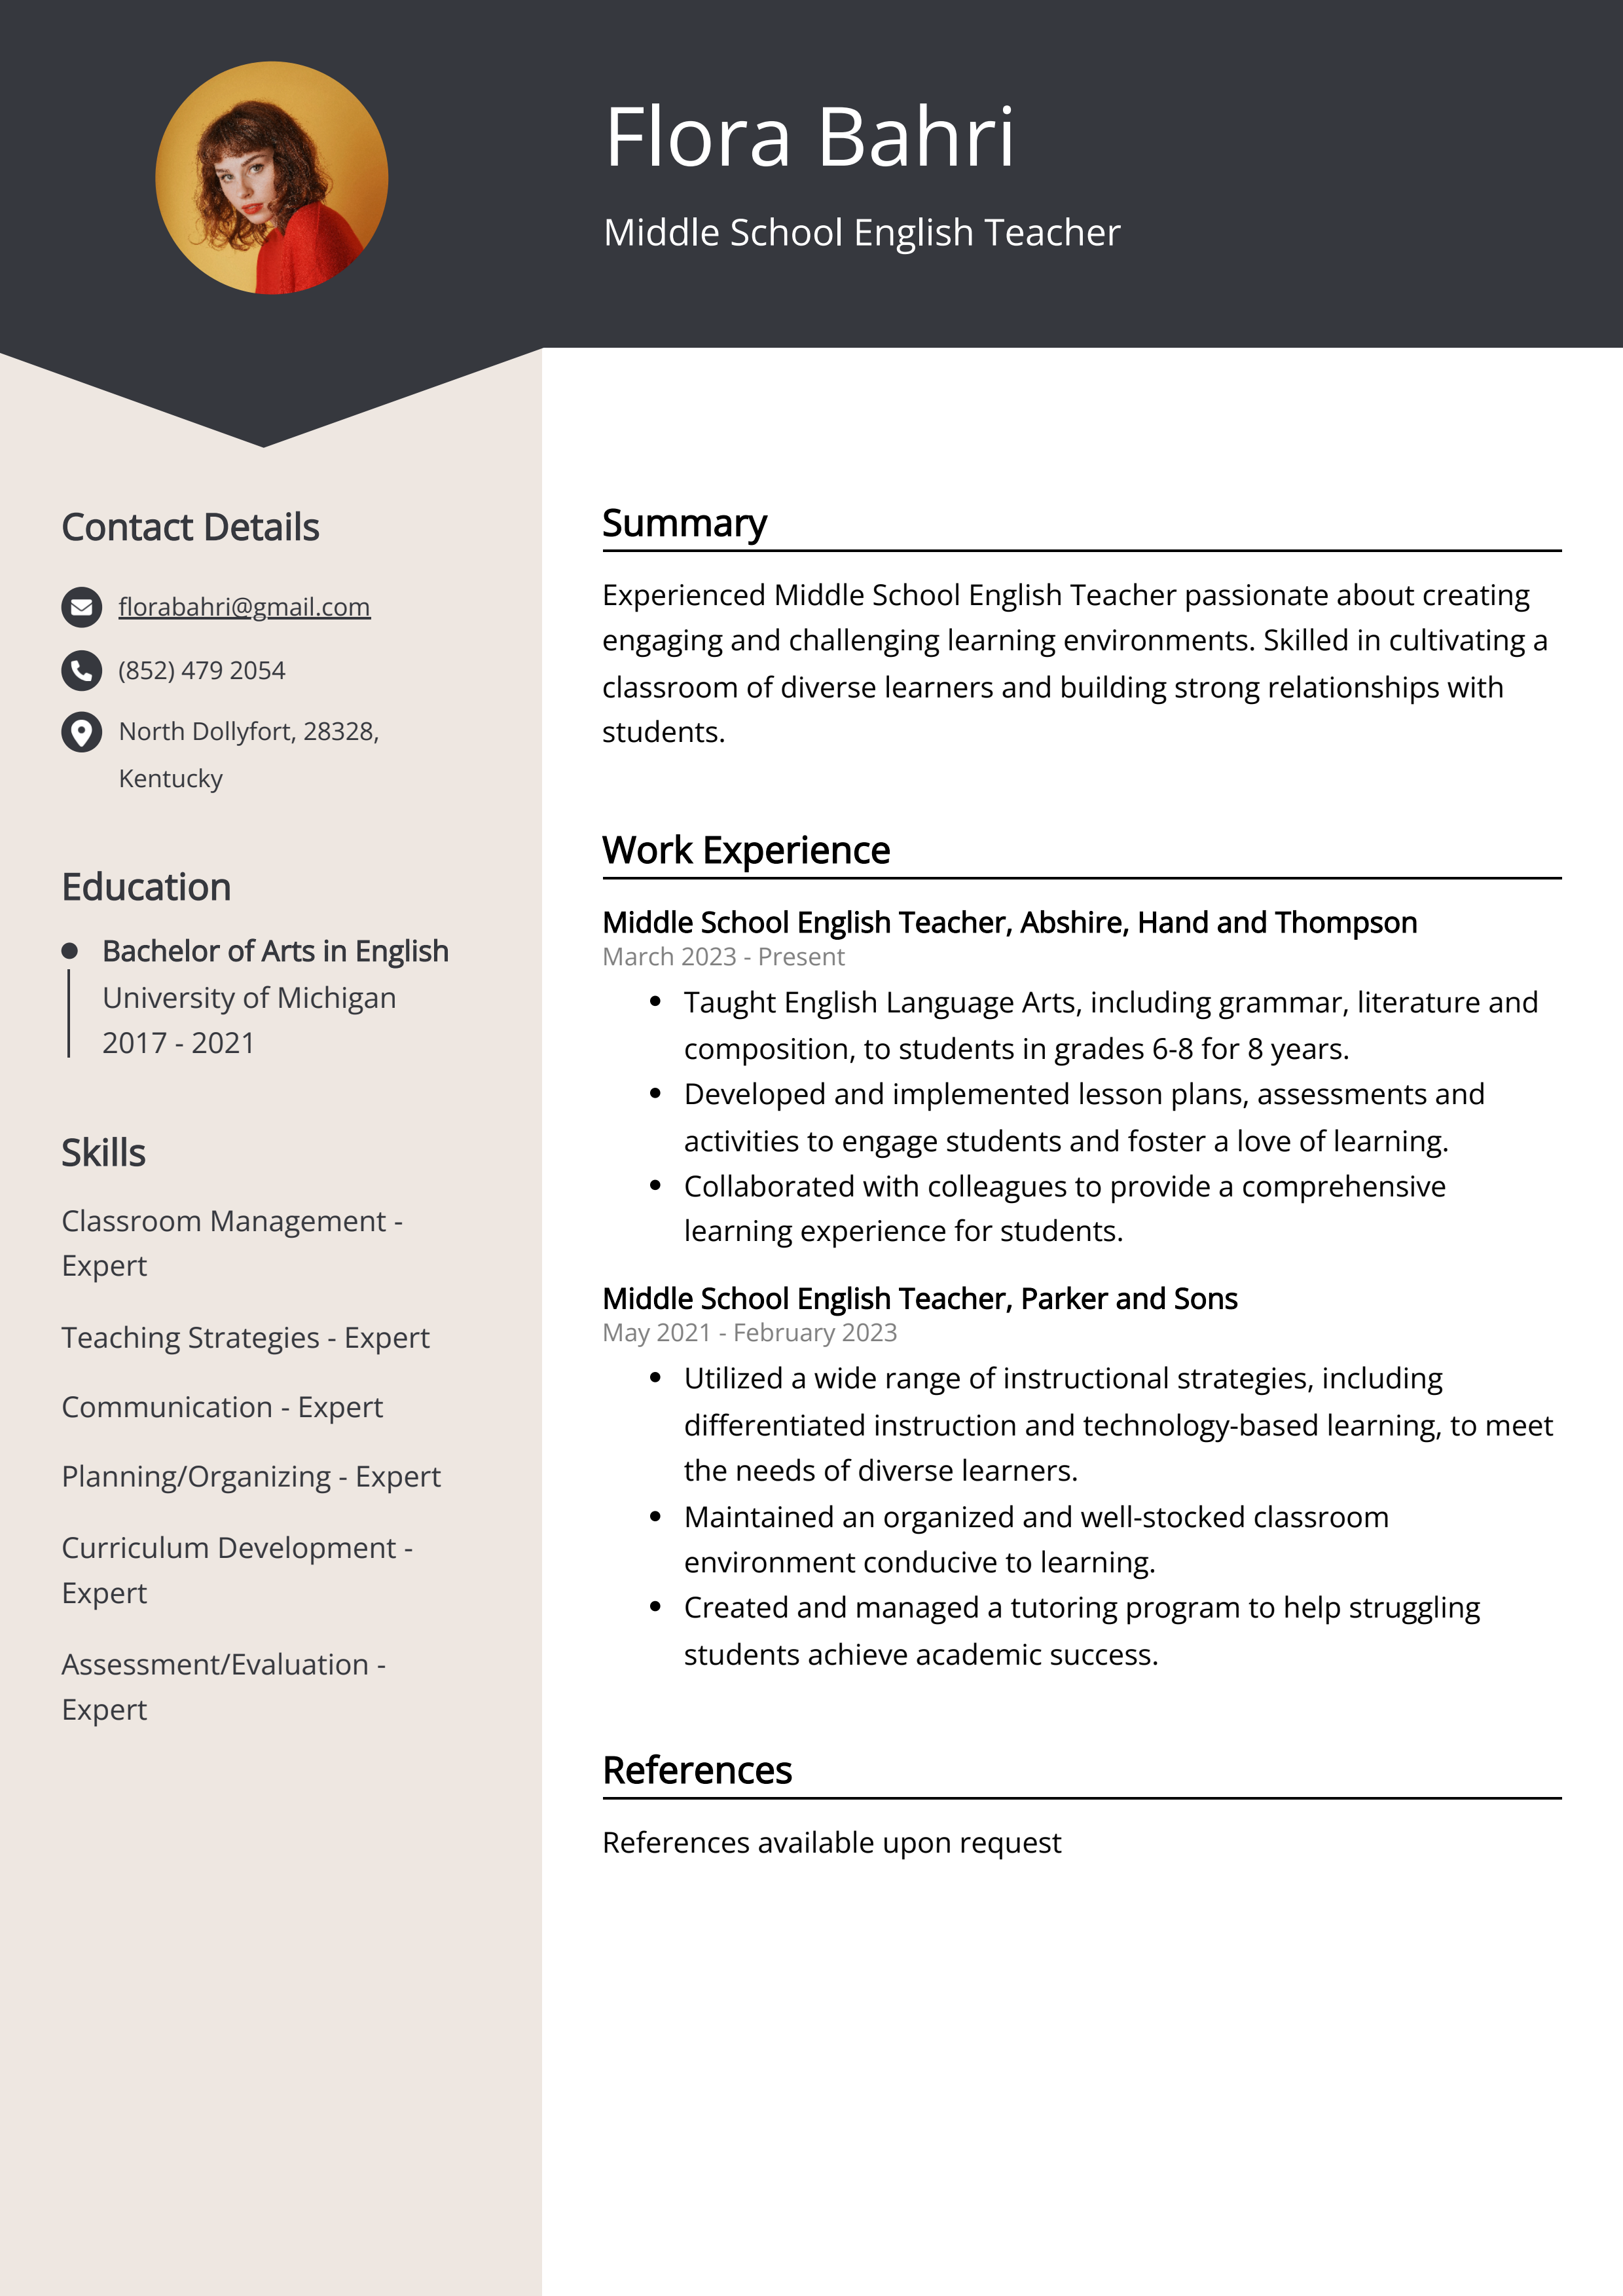 Middle School English Teacher CV Example